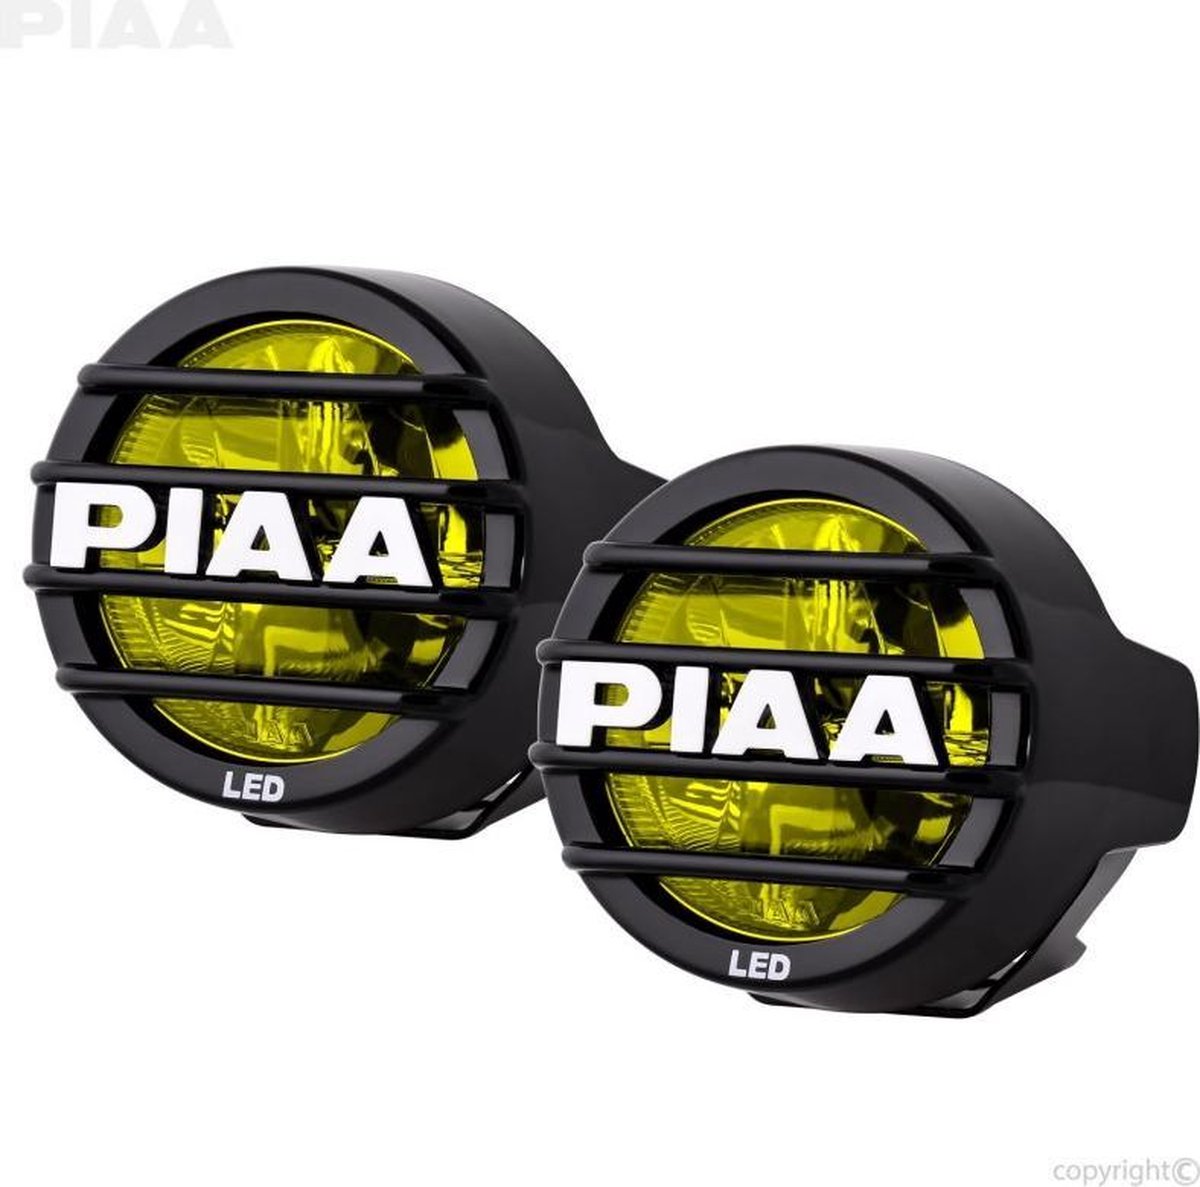 PIAA LP530 ION - Led lamp geel - driving - auto verlichting - 12-24 volt